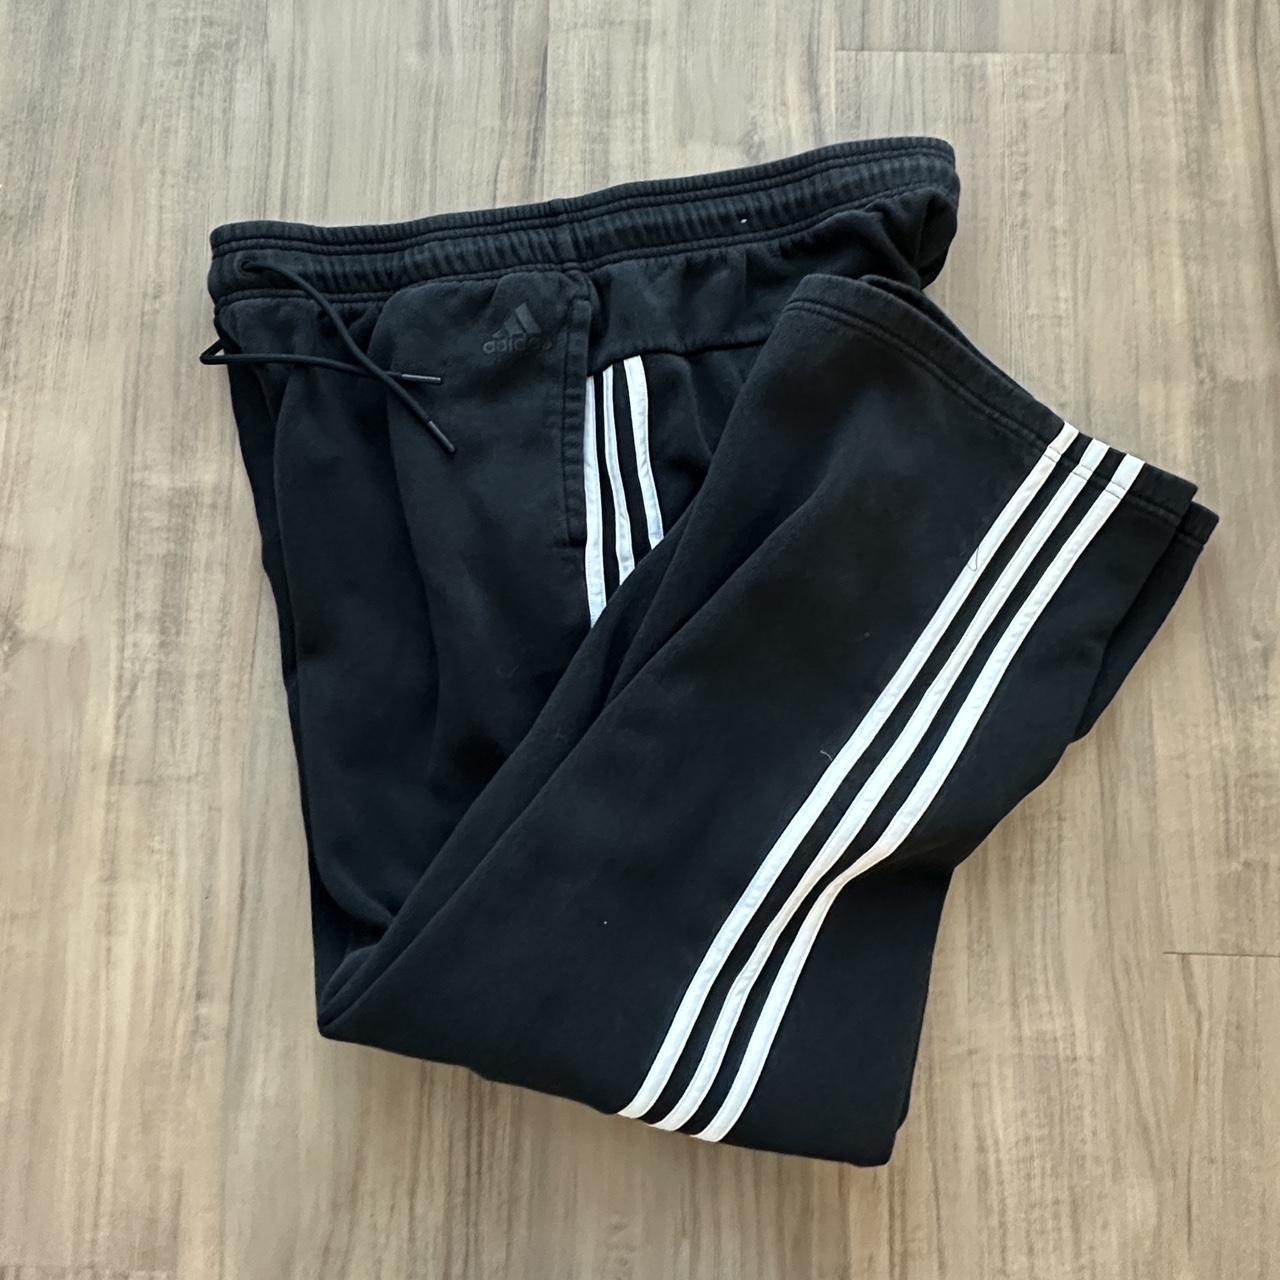 Adidas Men’s track pants sweat pants Size XL;... - Depop